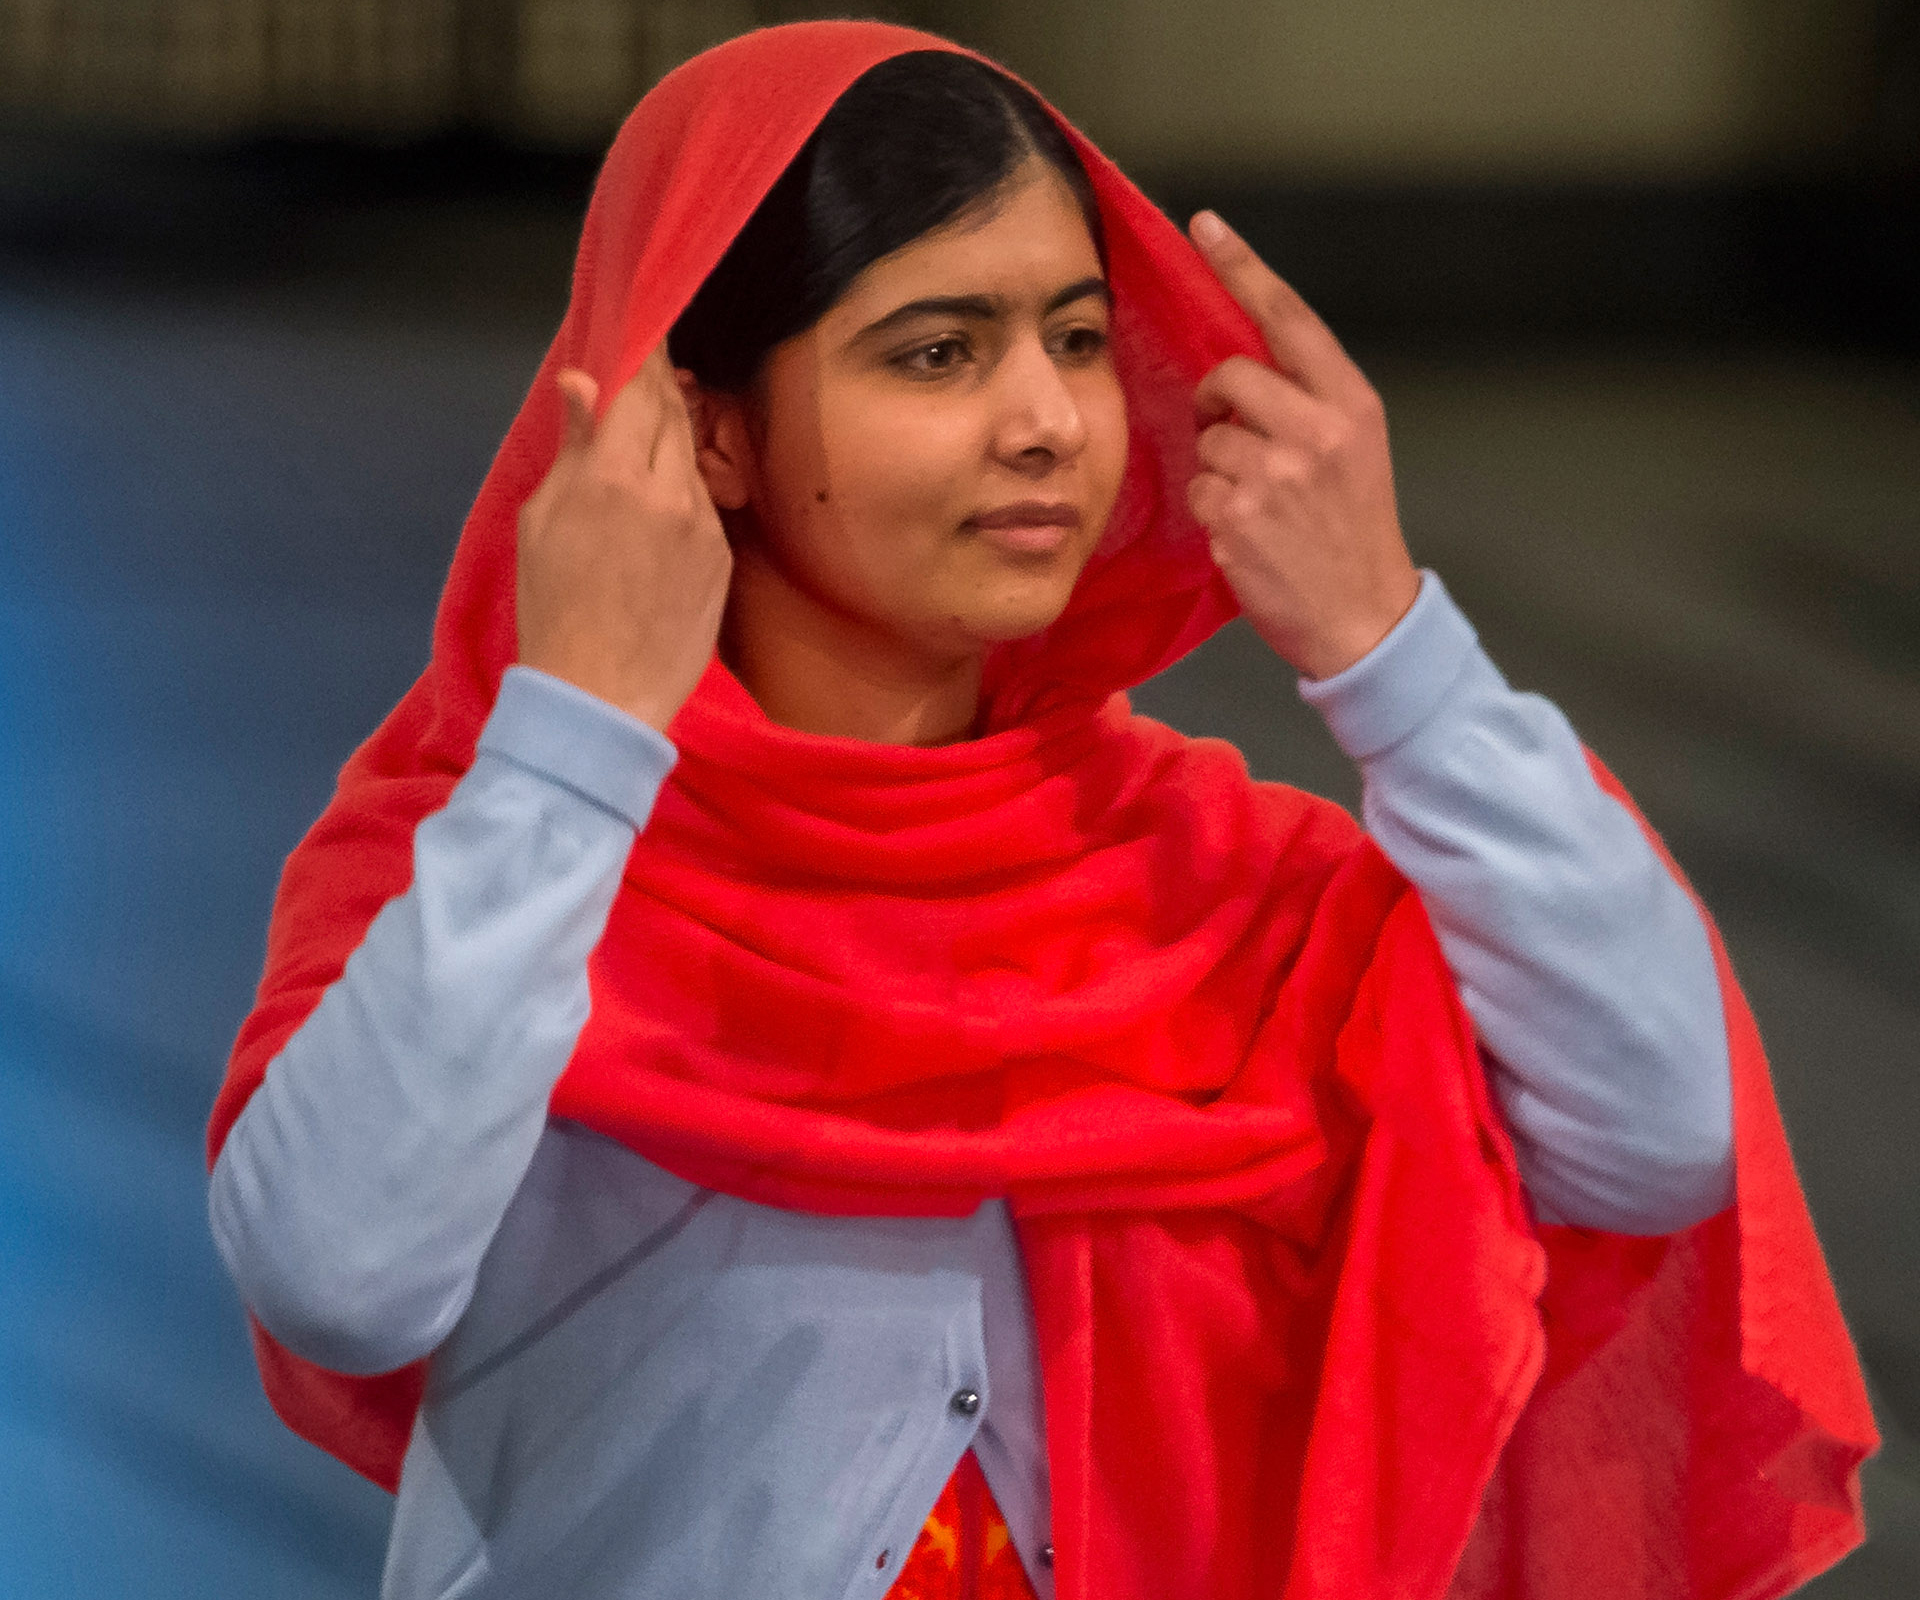 10 men sentenced to life in prison over Malala Yousafzai’s shooting